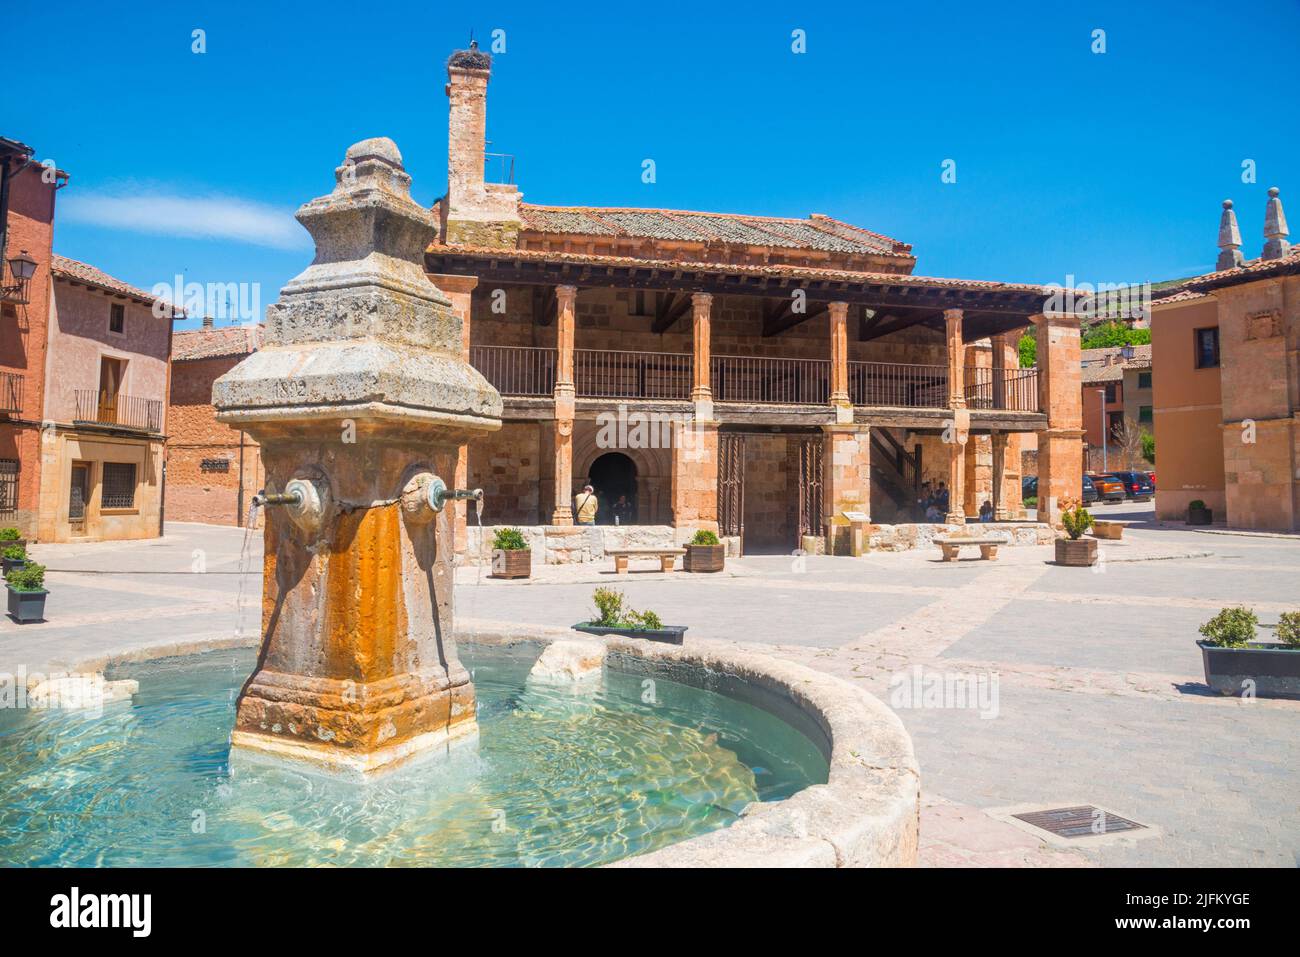 Fountain and San Miguel church. Plaza Mayor, Ayllon, Segovia province, Castilla Leon, Spain. Stock Photo